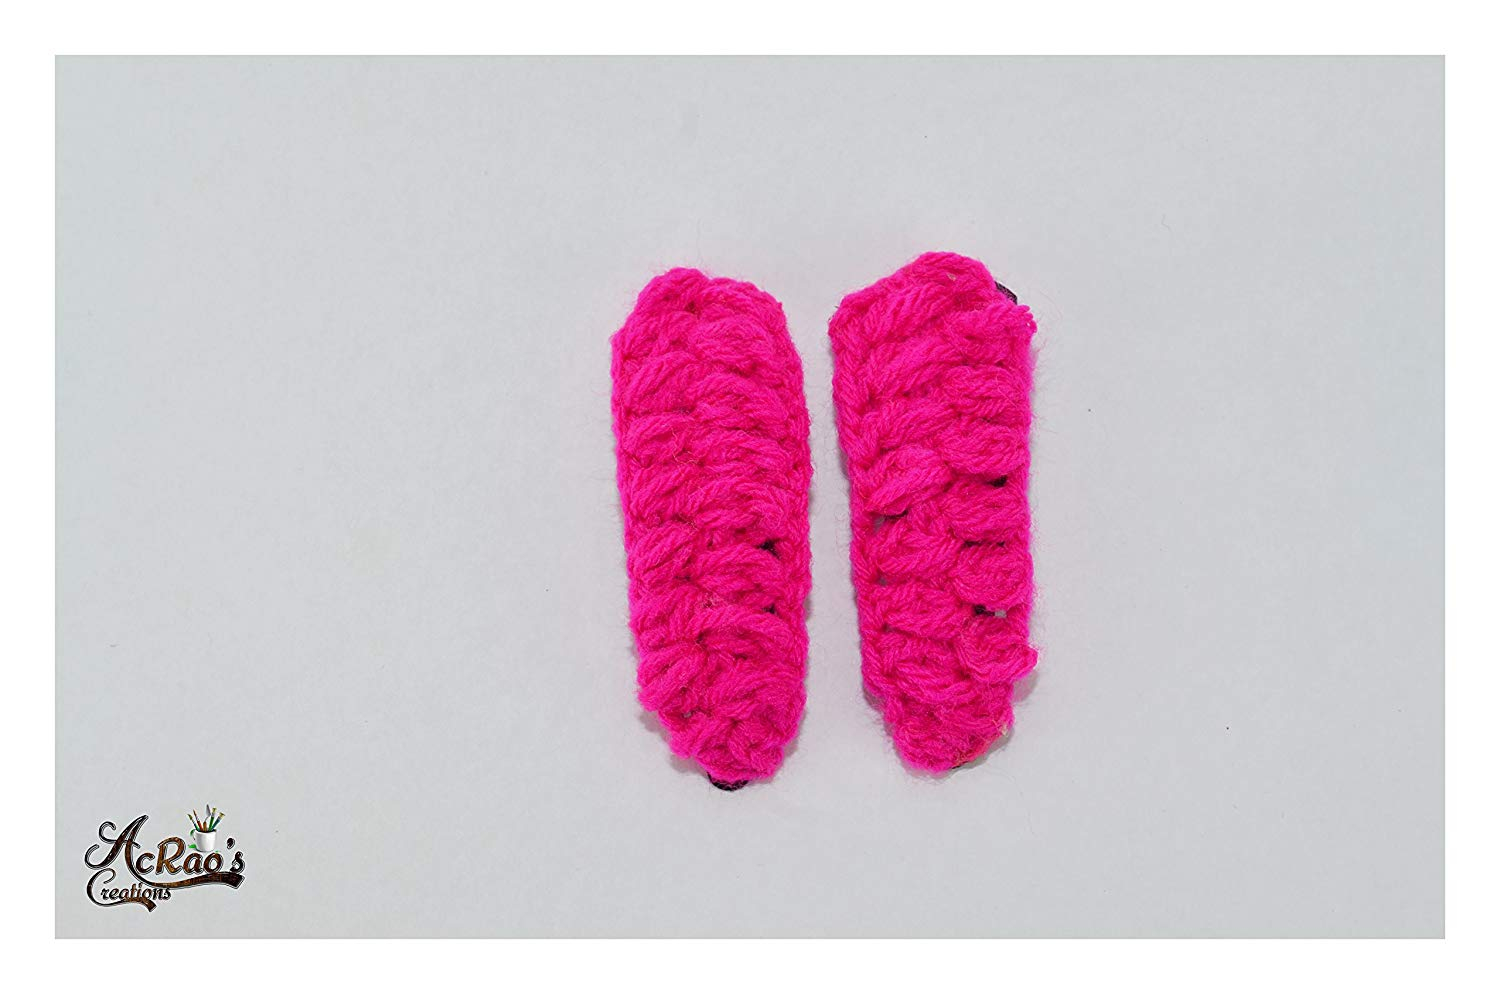 Crochet Hair Clip Patterns Free Cheap Free Crochet Hair Accessories Patterns Find Free Crochet Hair